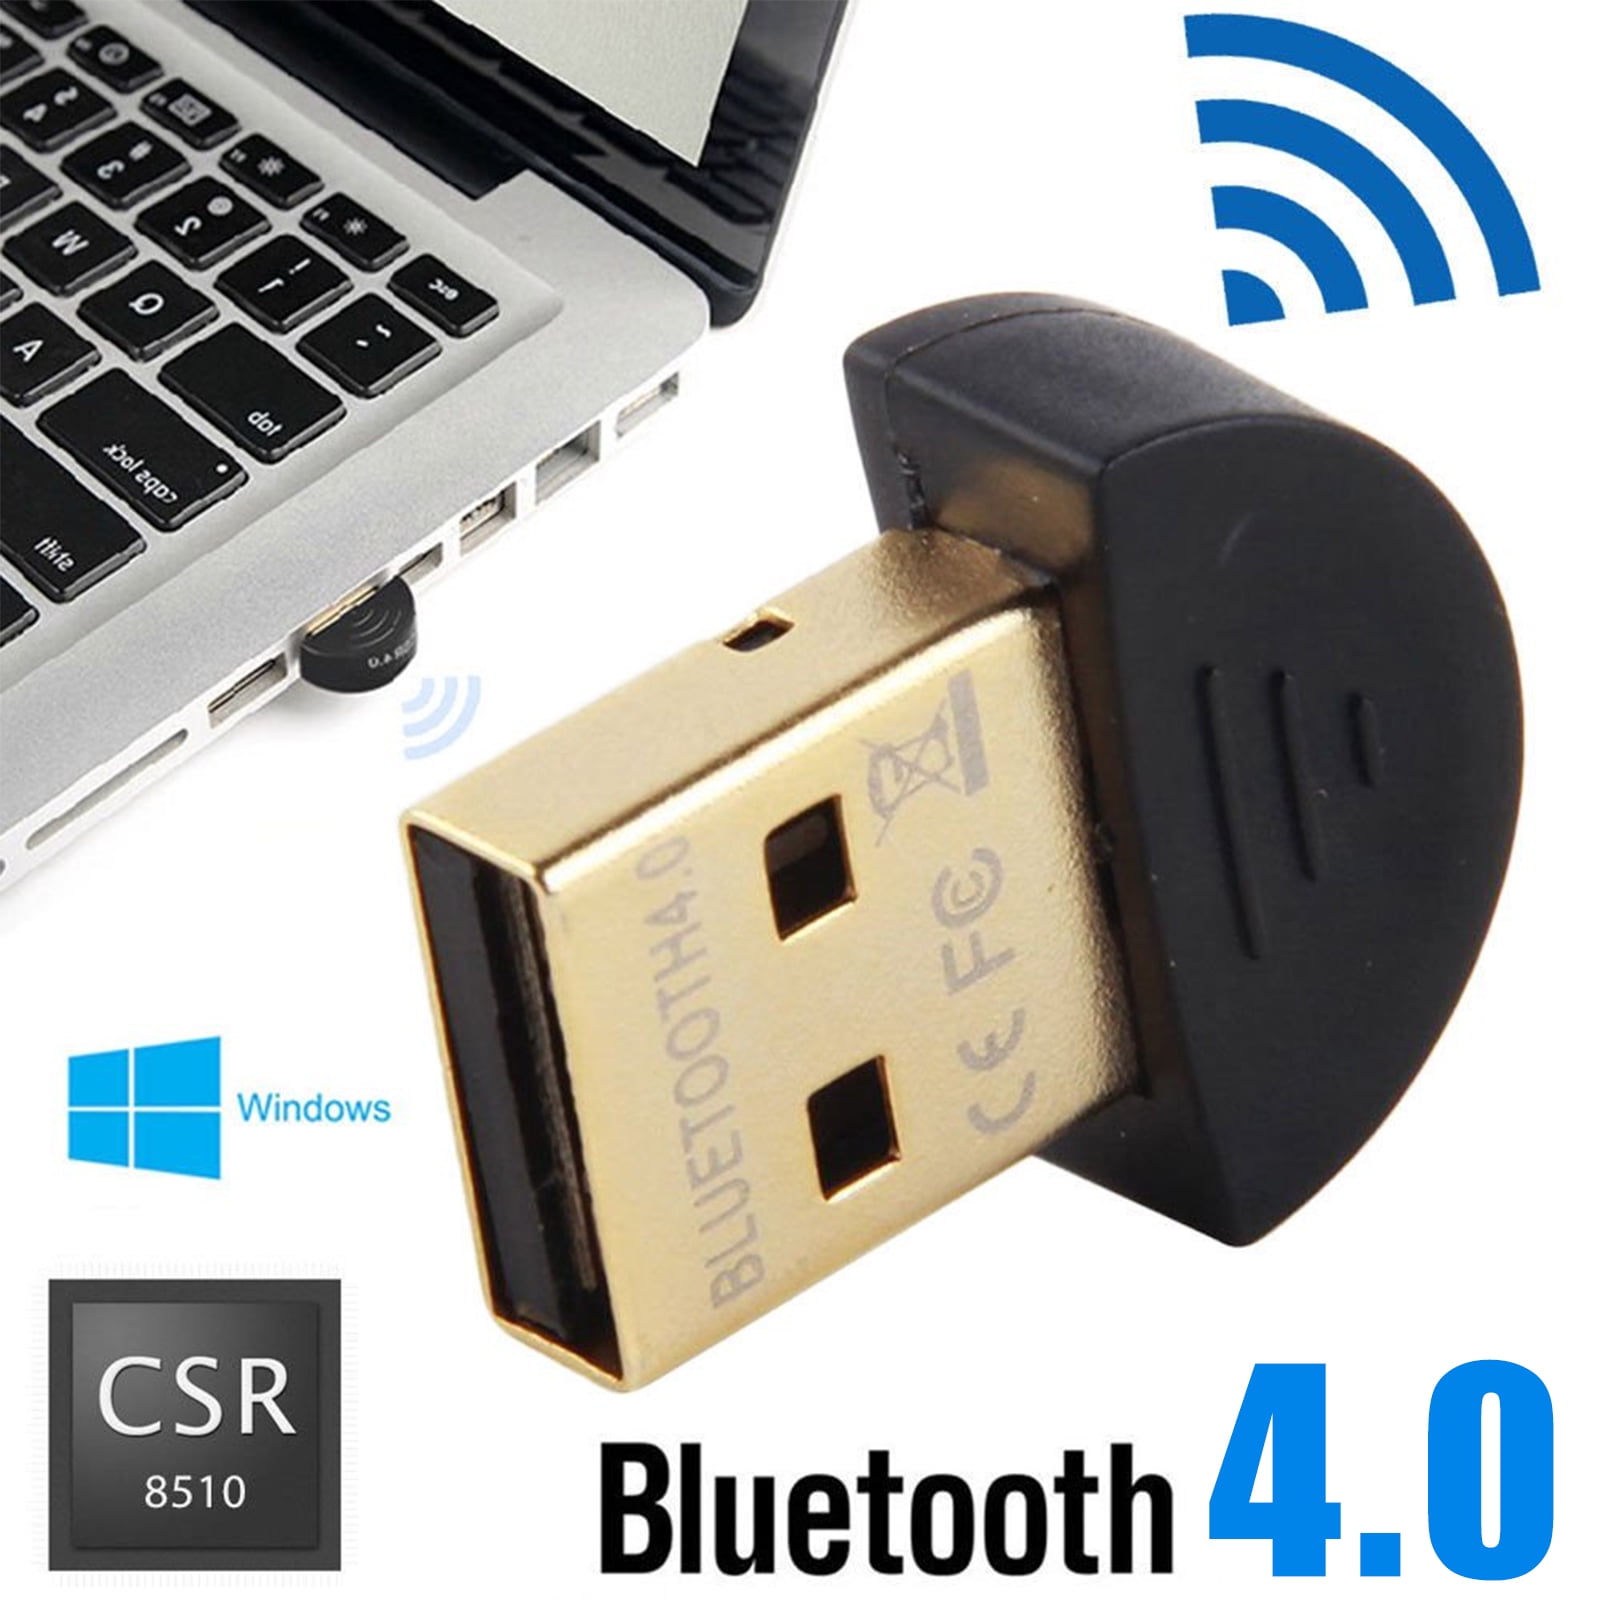 Windows 10, 8.1, 8, 7, Plugable USB Bluetooth 4.0 Low Energy Micro Adapter 